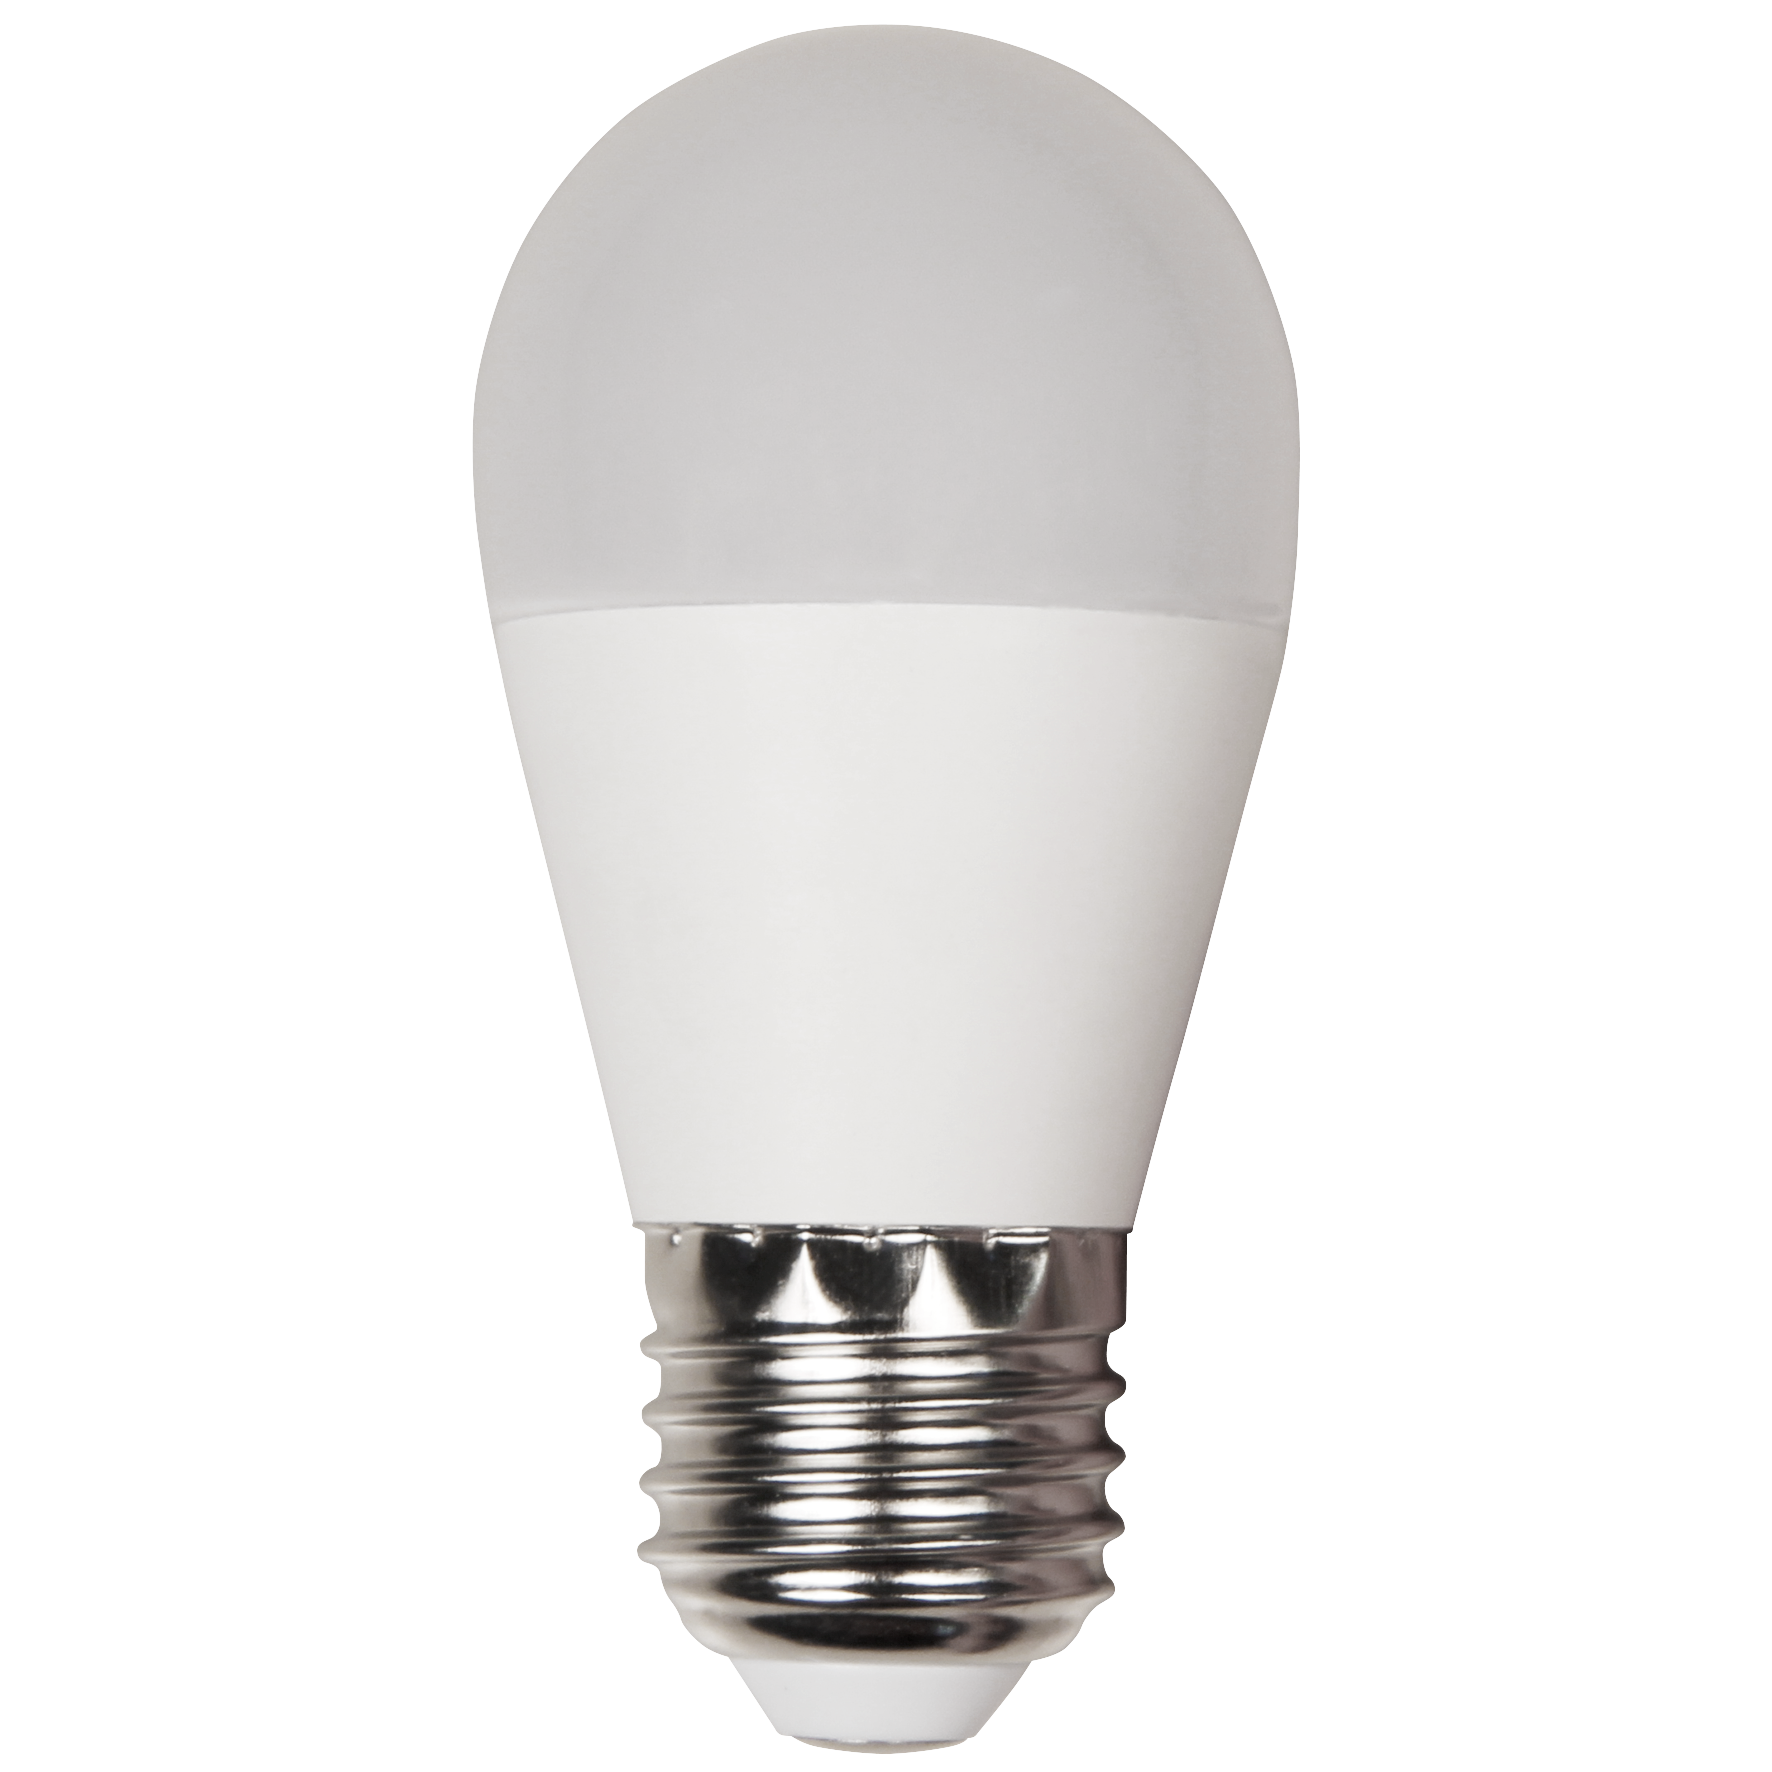 LED Tropfenlampe McShine, E27, 7W, 600lm, 160°, 3000K, warmweiß, Ø45x88mm